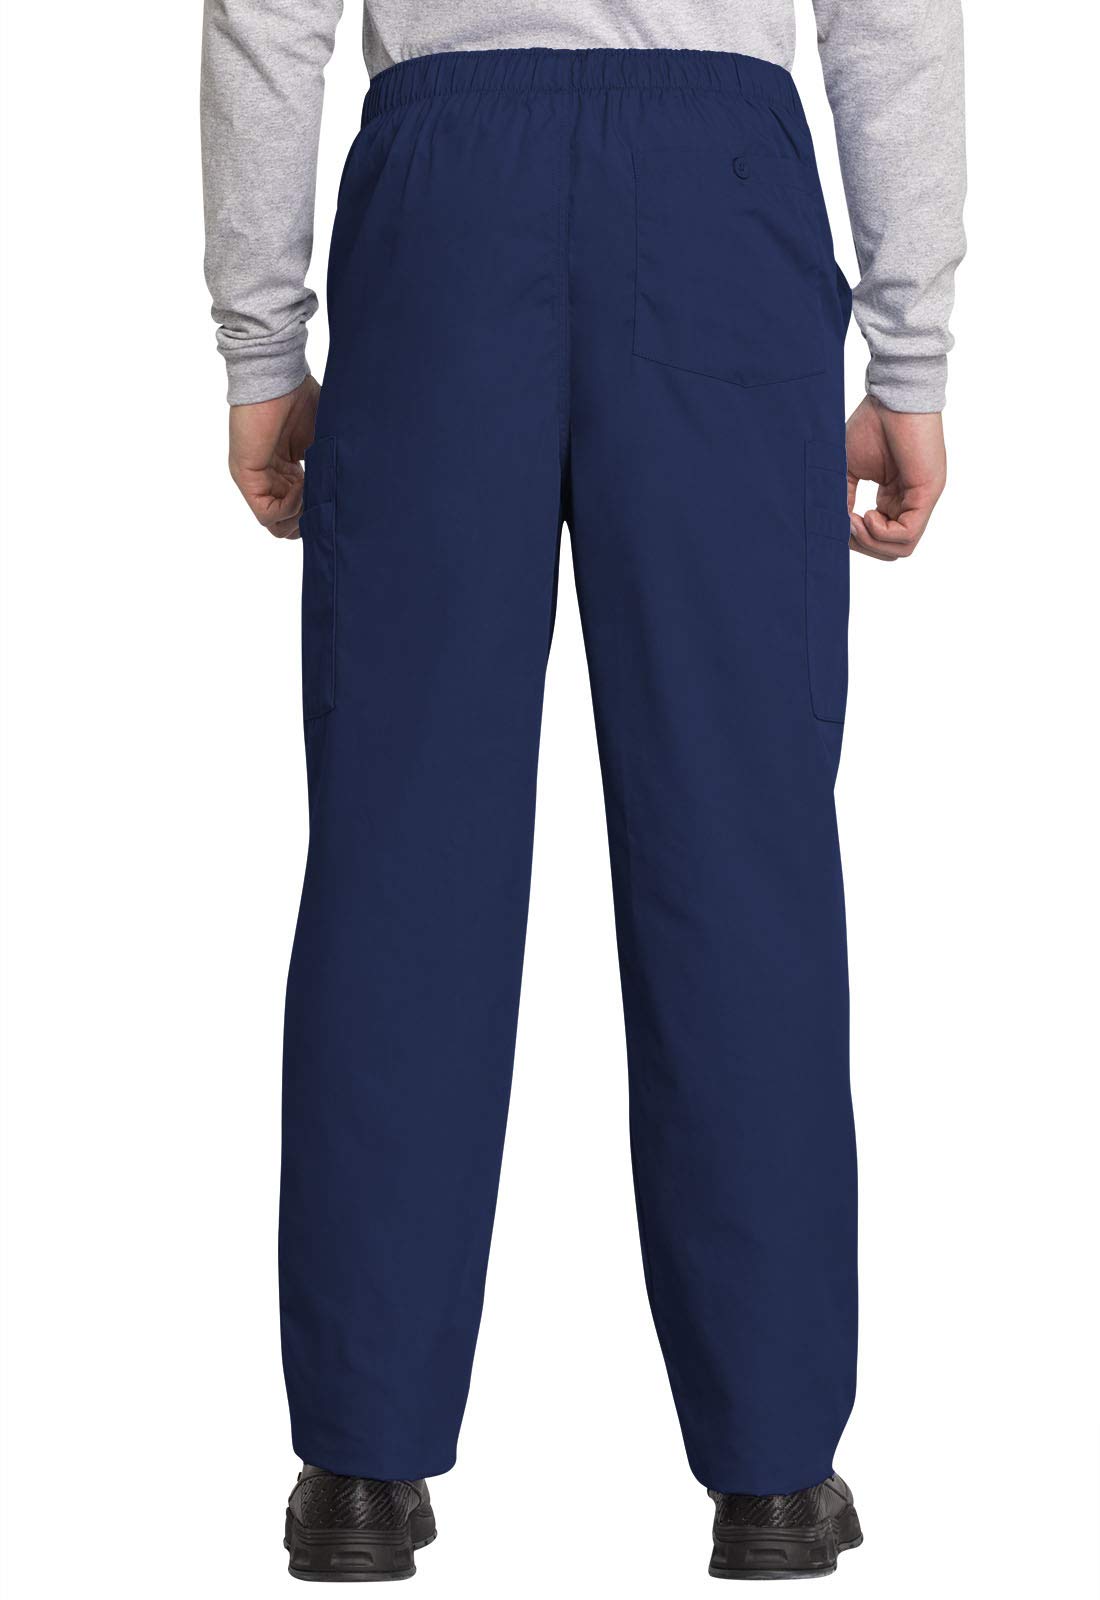 Medical Cargo Pants for Men Workwear Originals, Zipper Fly Scrubs for Men 4000